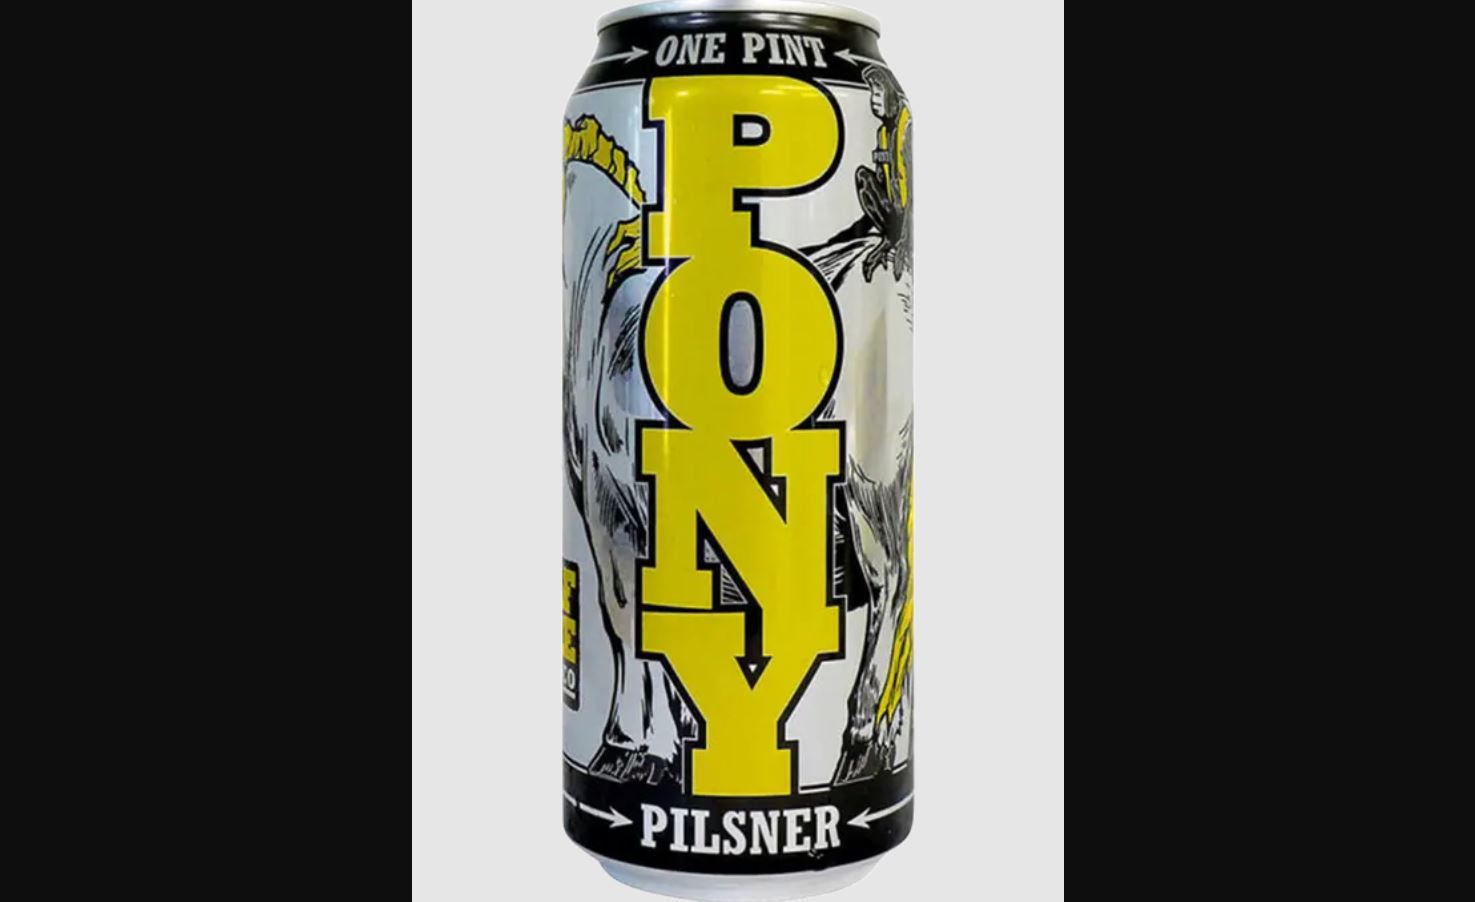 Half Acre Pony Pilsner